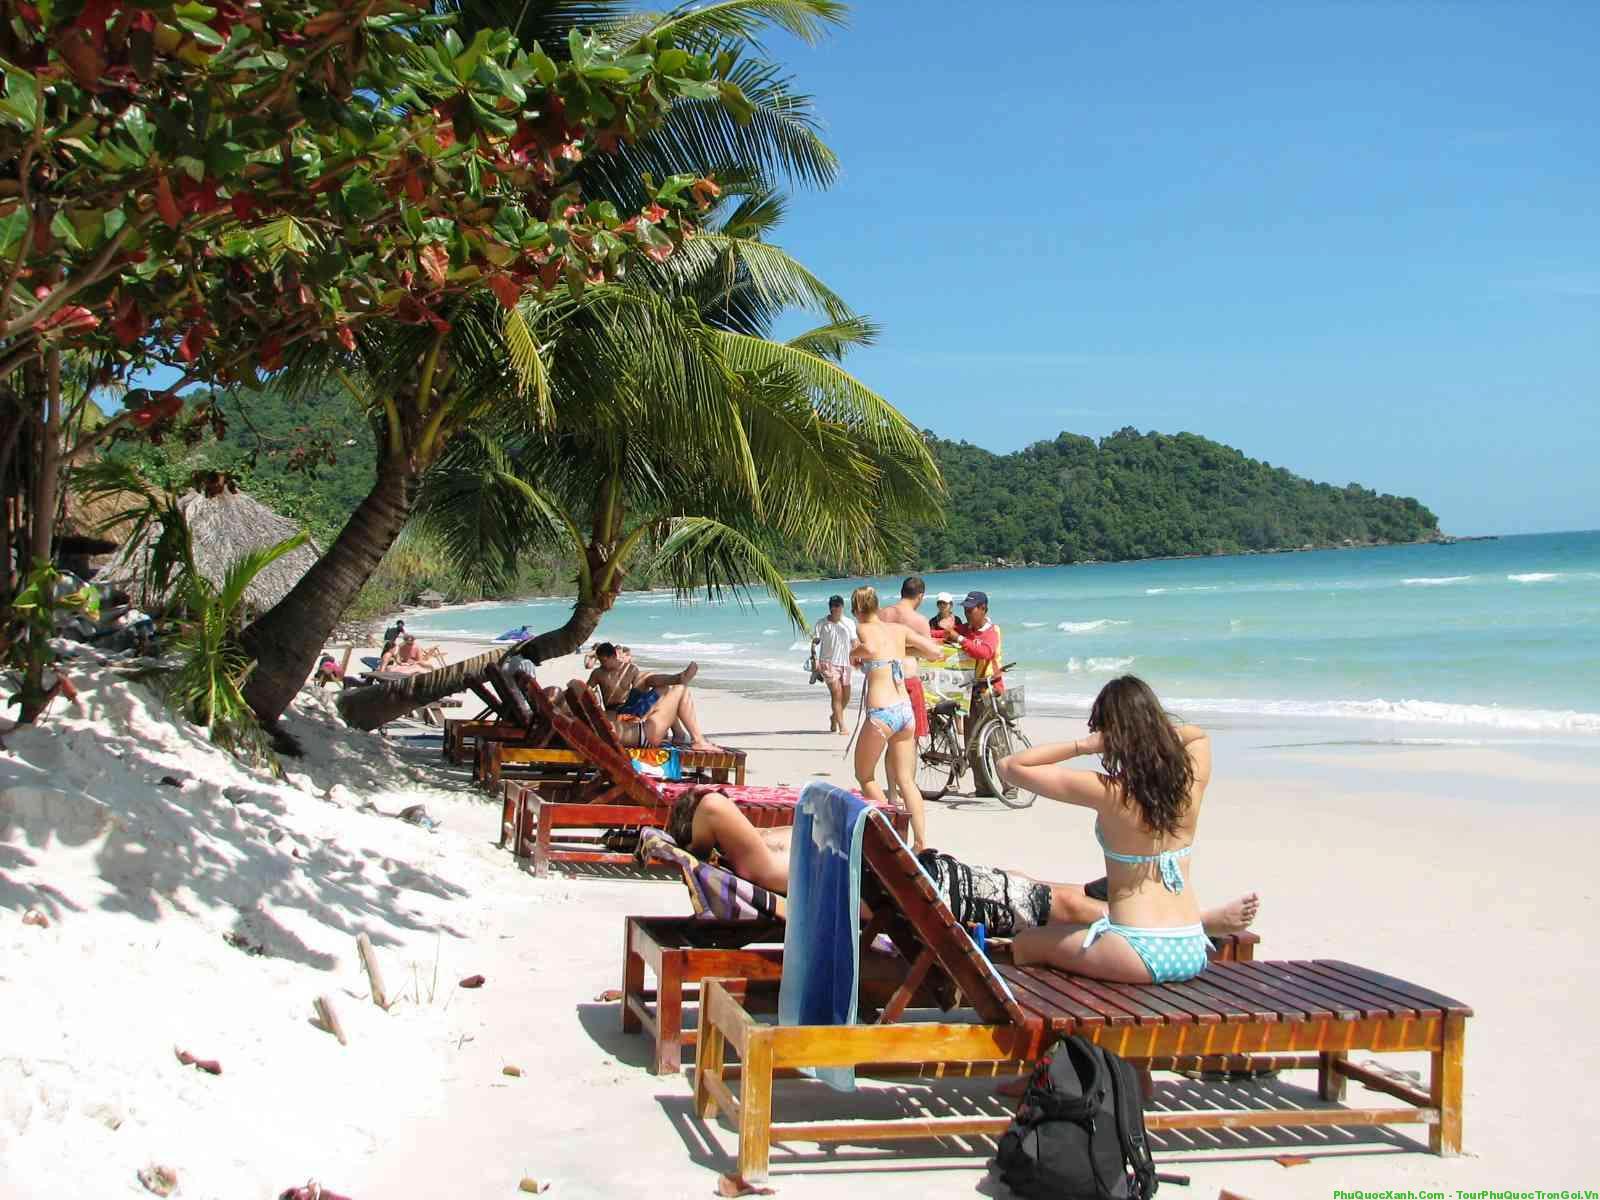 The best beach resort area in Vietnam - Thailand and Cambodia